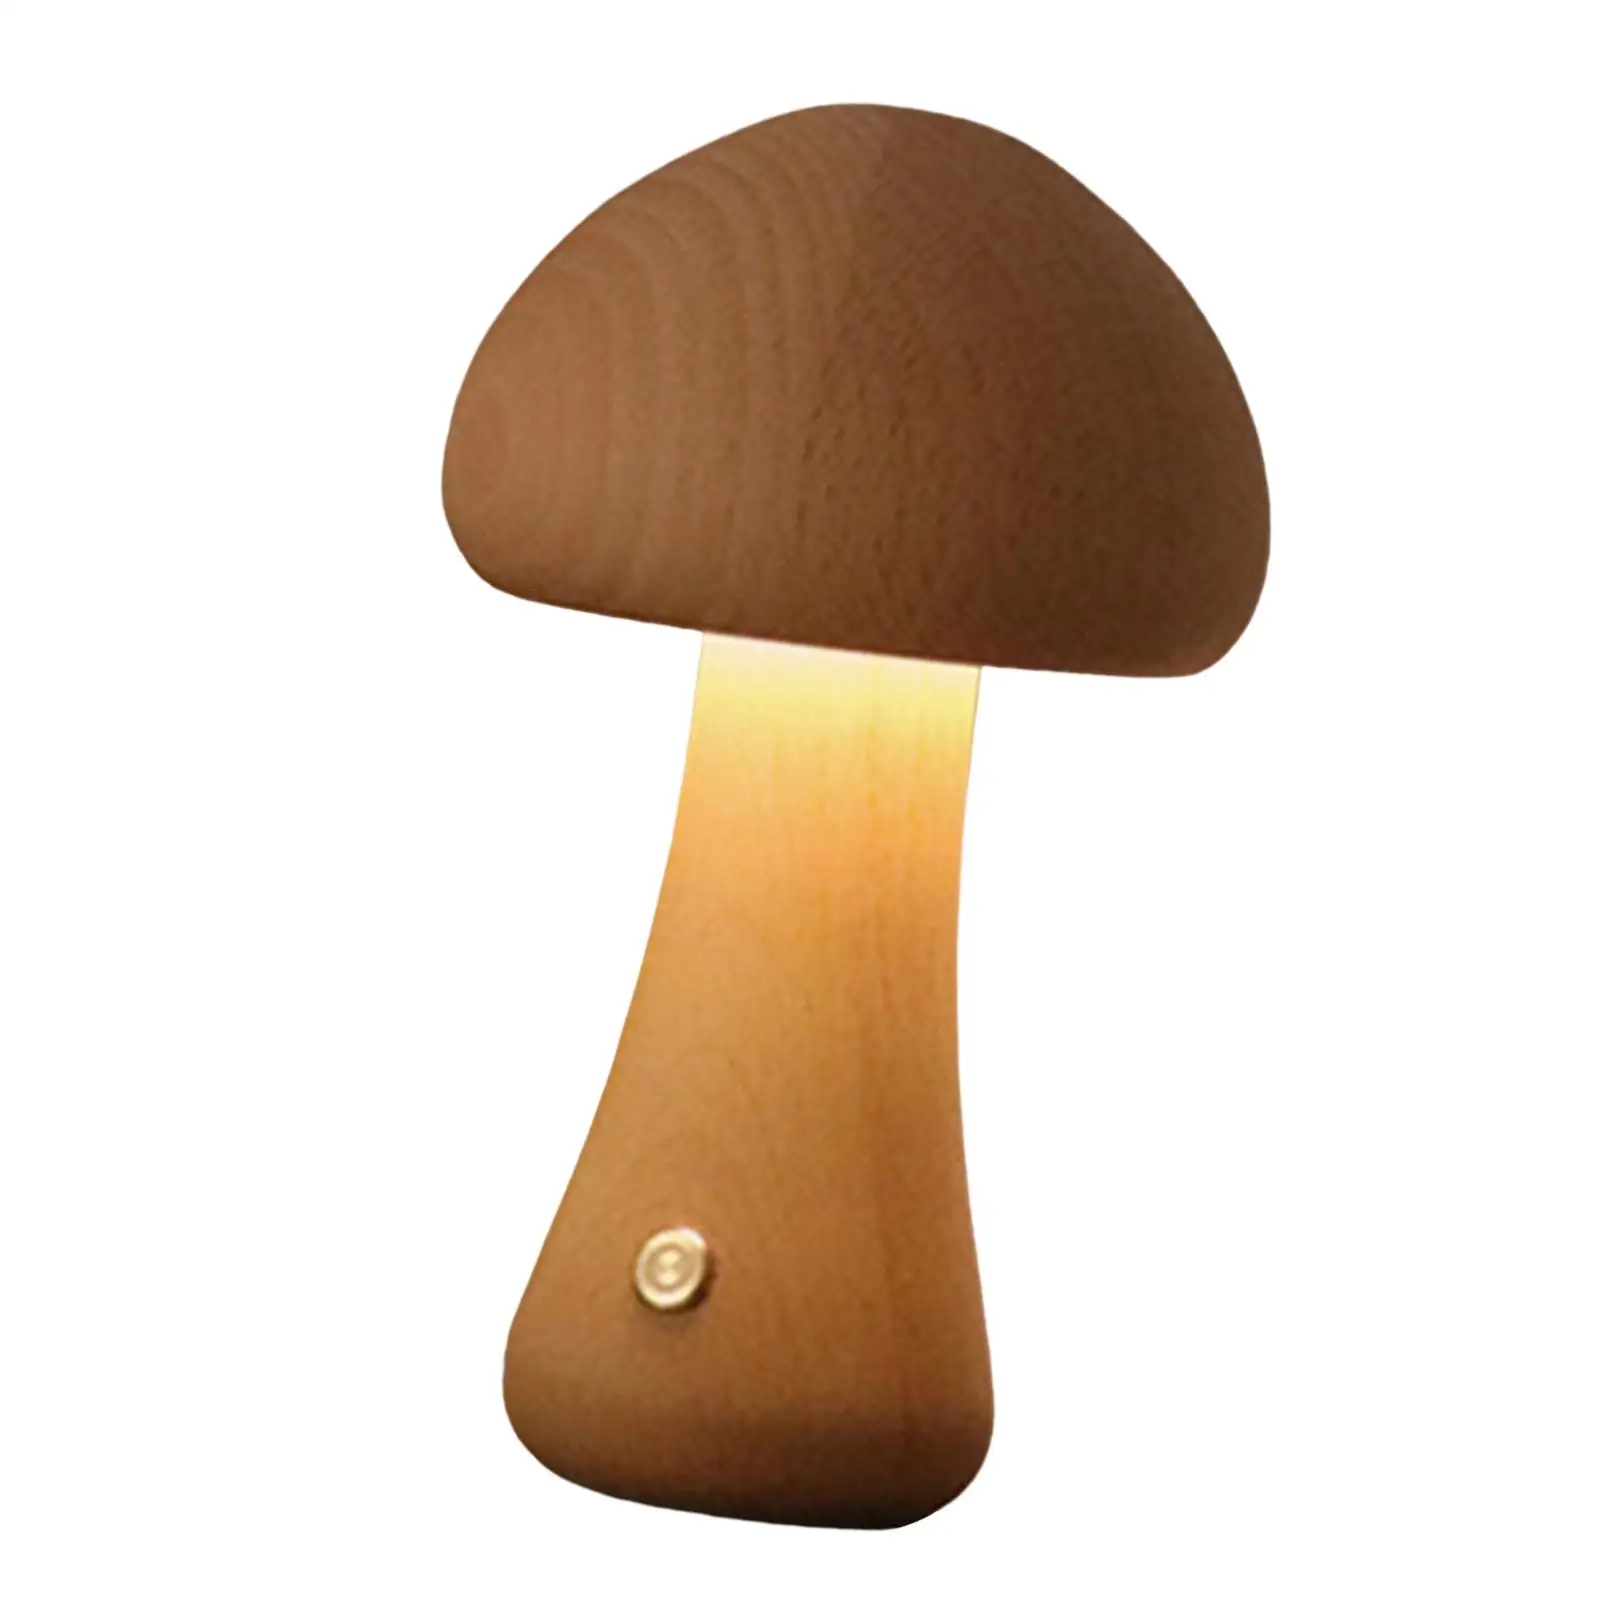 Mushroom Table Lamp Touch USB Creative Night Light Ornament Night Light for Hotel Night Reading Living Room Party Decor Bedroom